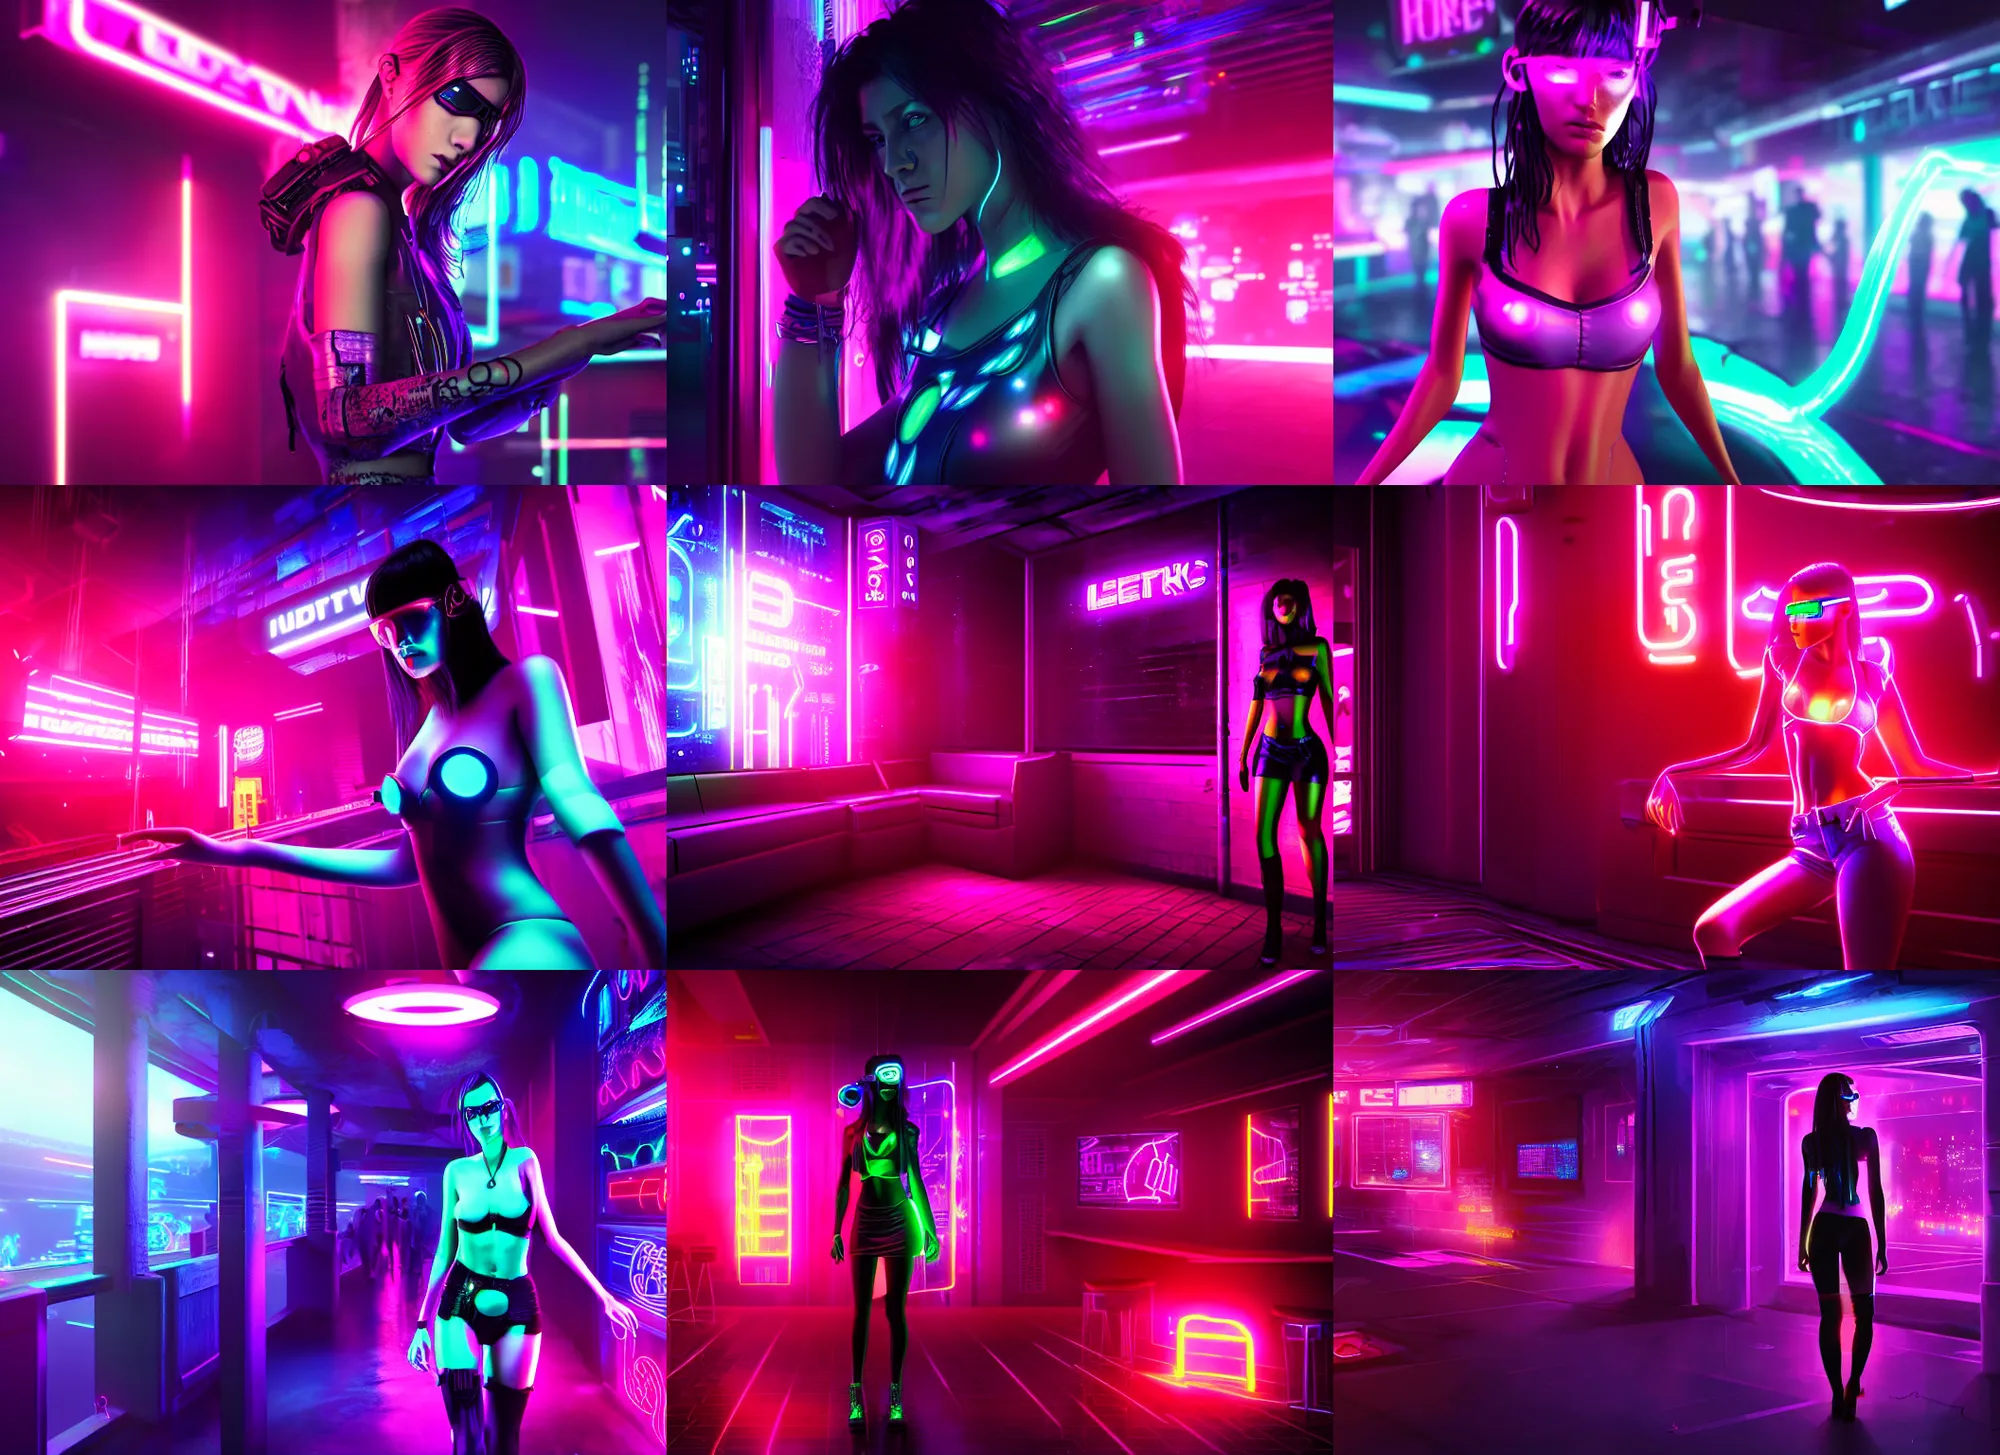 Prompt: Cyberpunk girl inside a busy neon nightclub, realistic, highly detailed digital art, 8k Octane